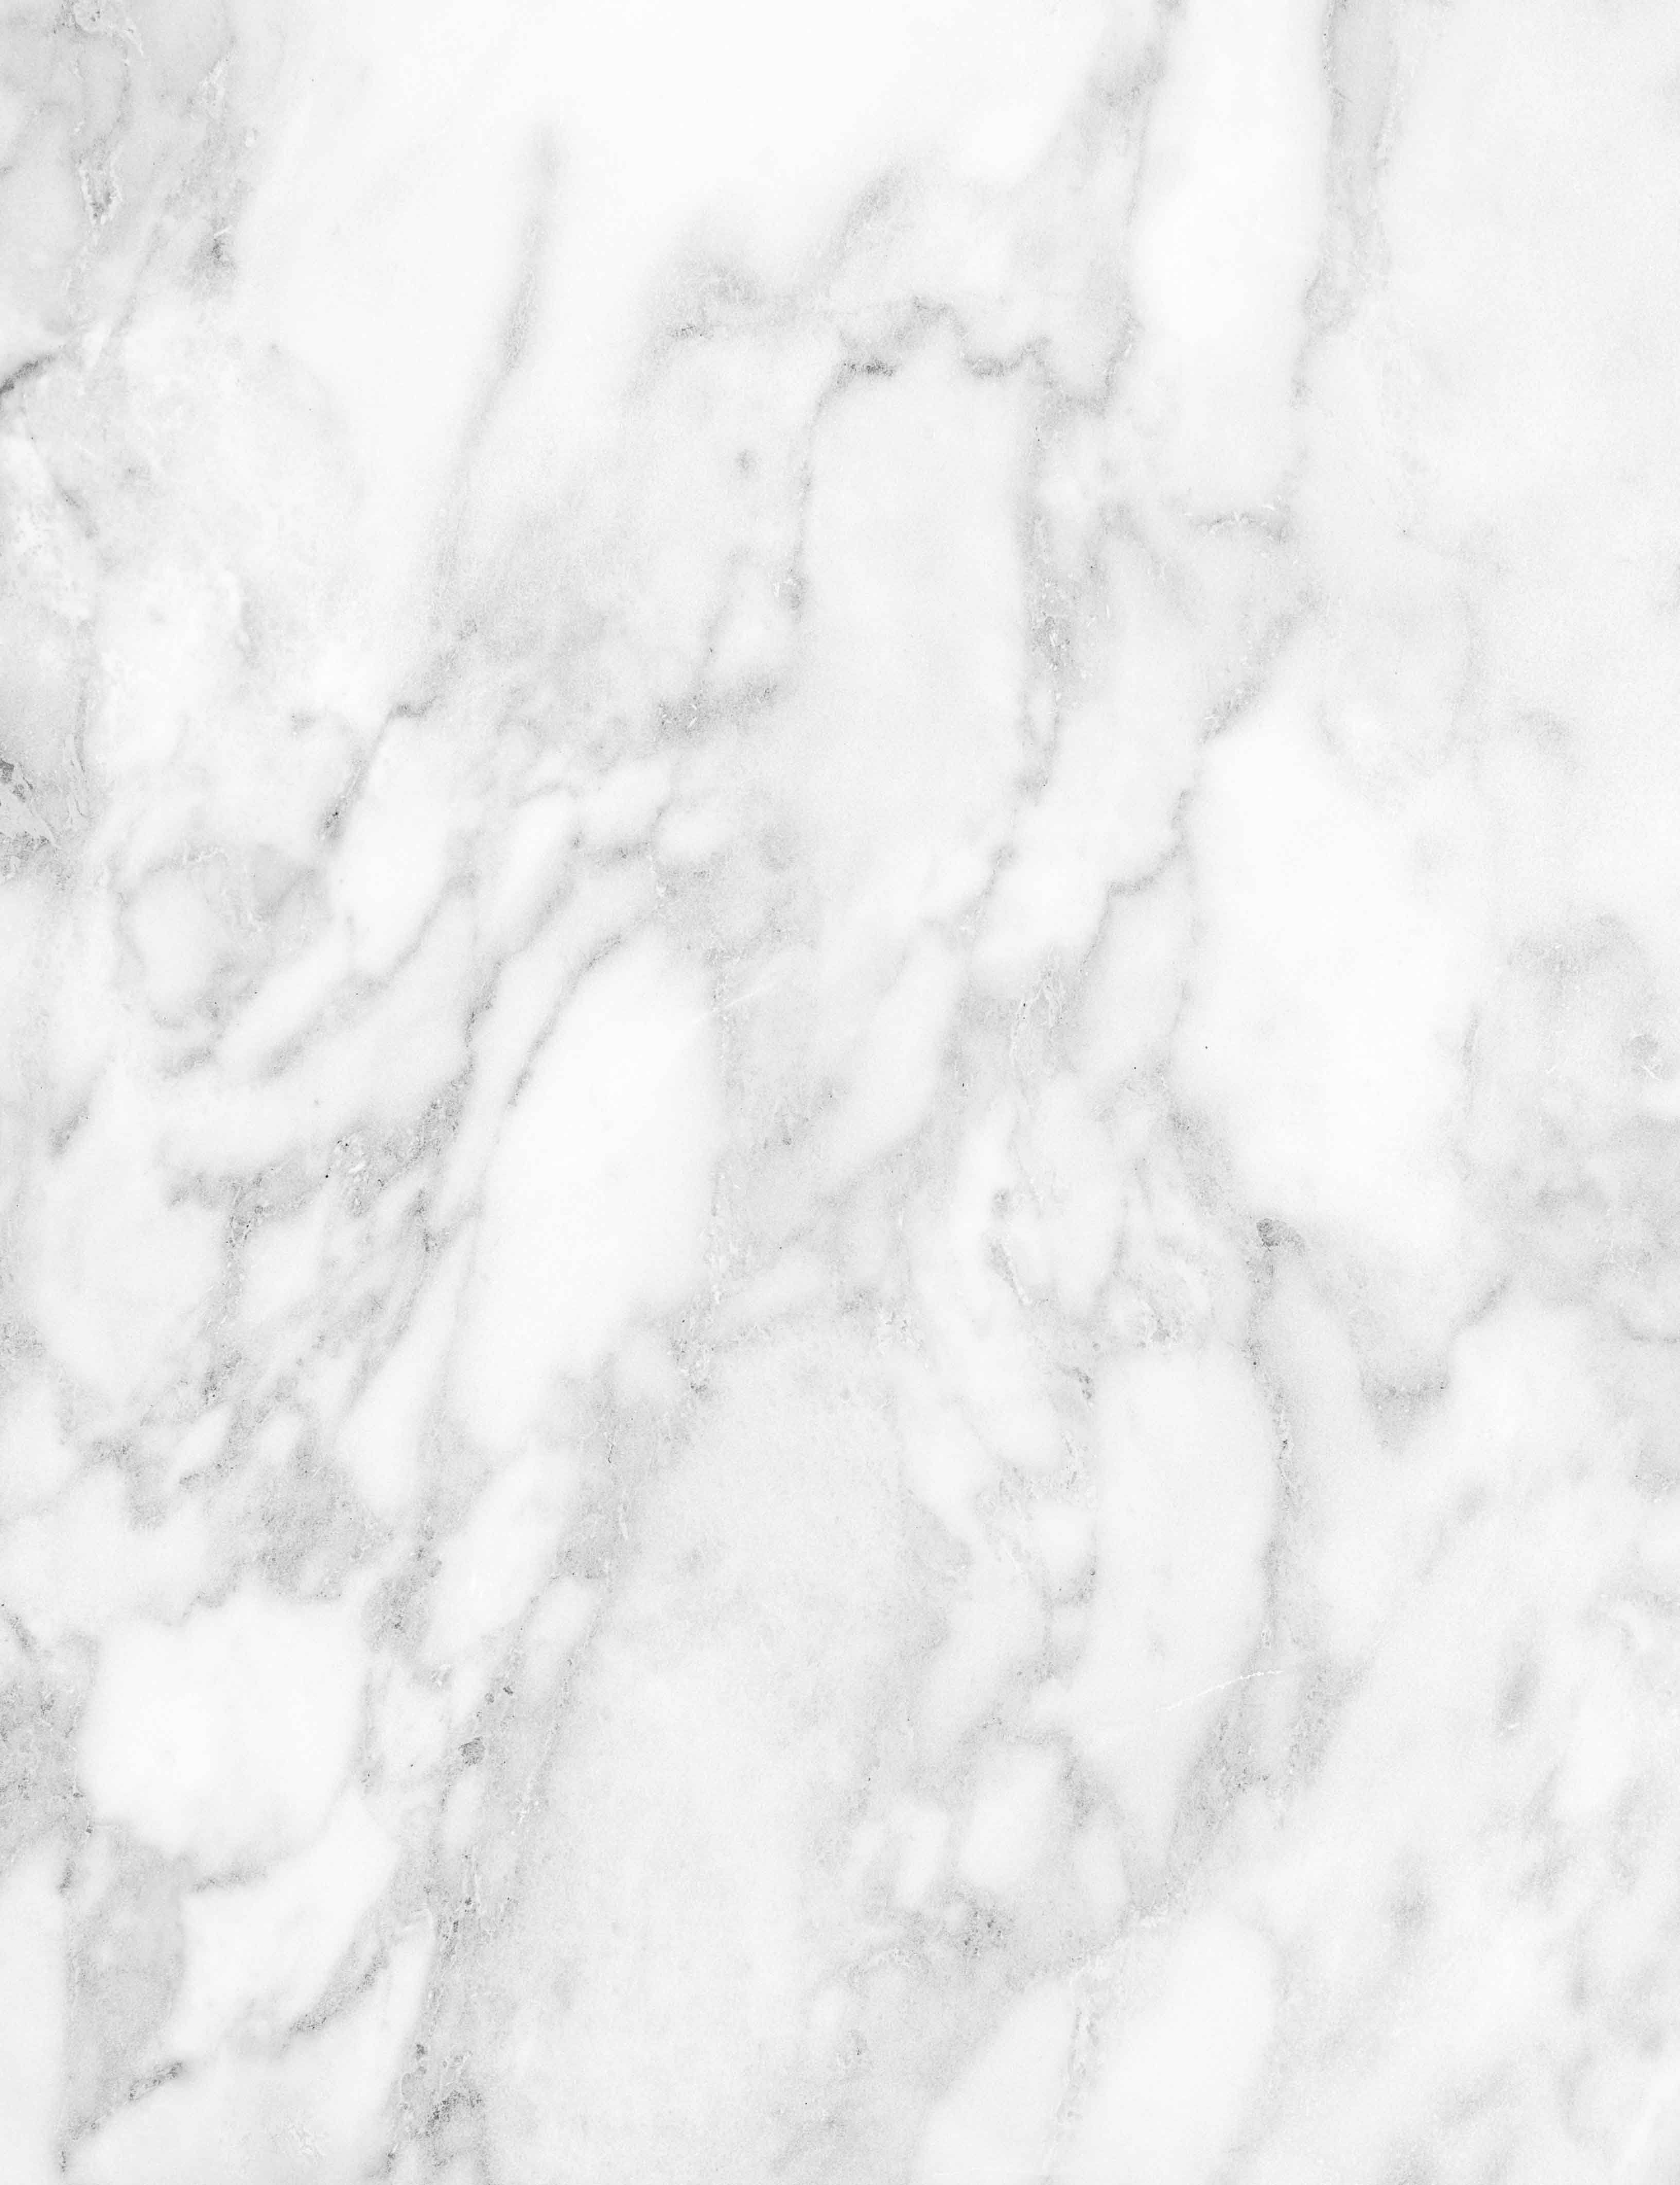 Retro White Smoke Marble With Gray Texture Floor Photography Backdrop Shopbackdrop